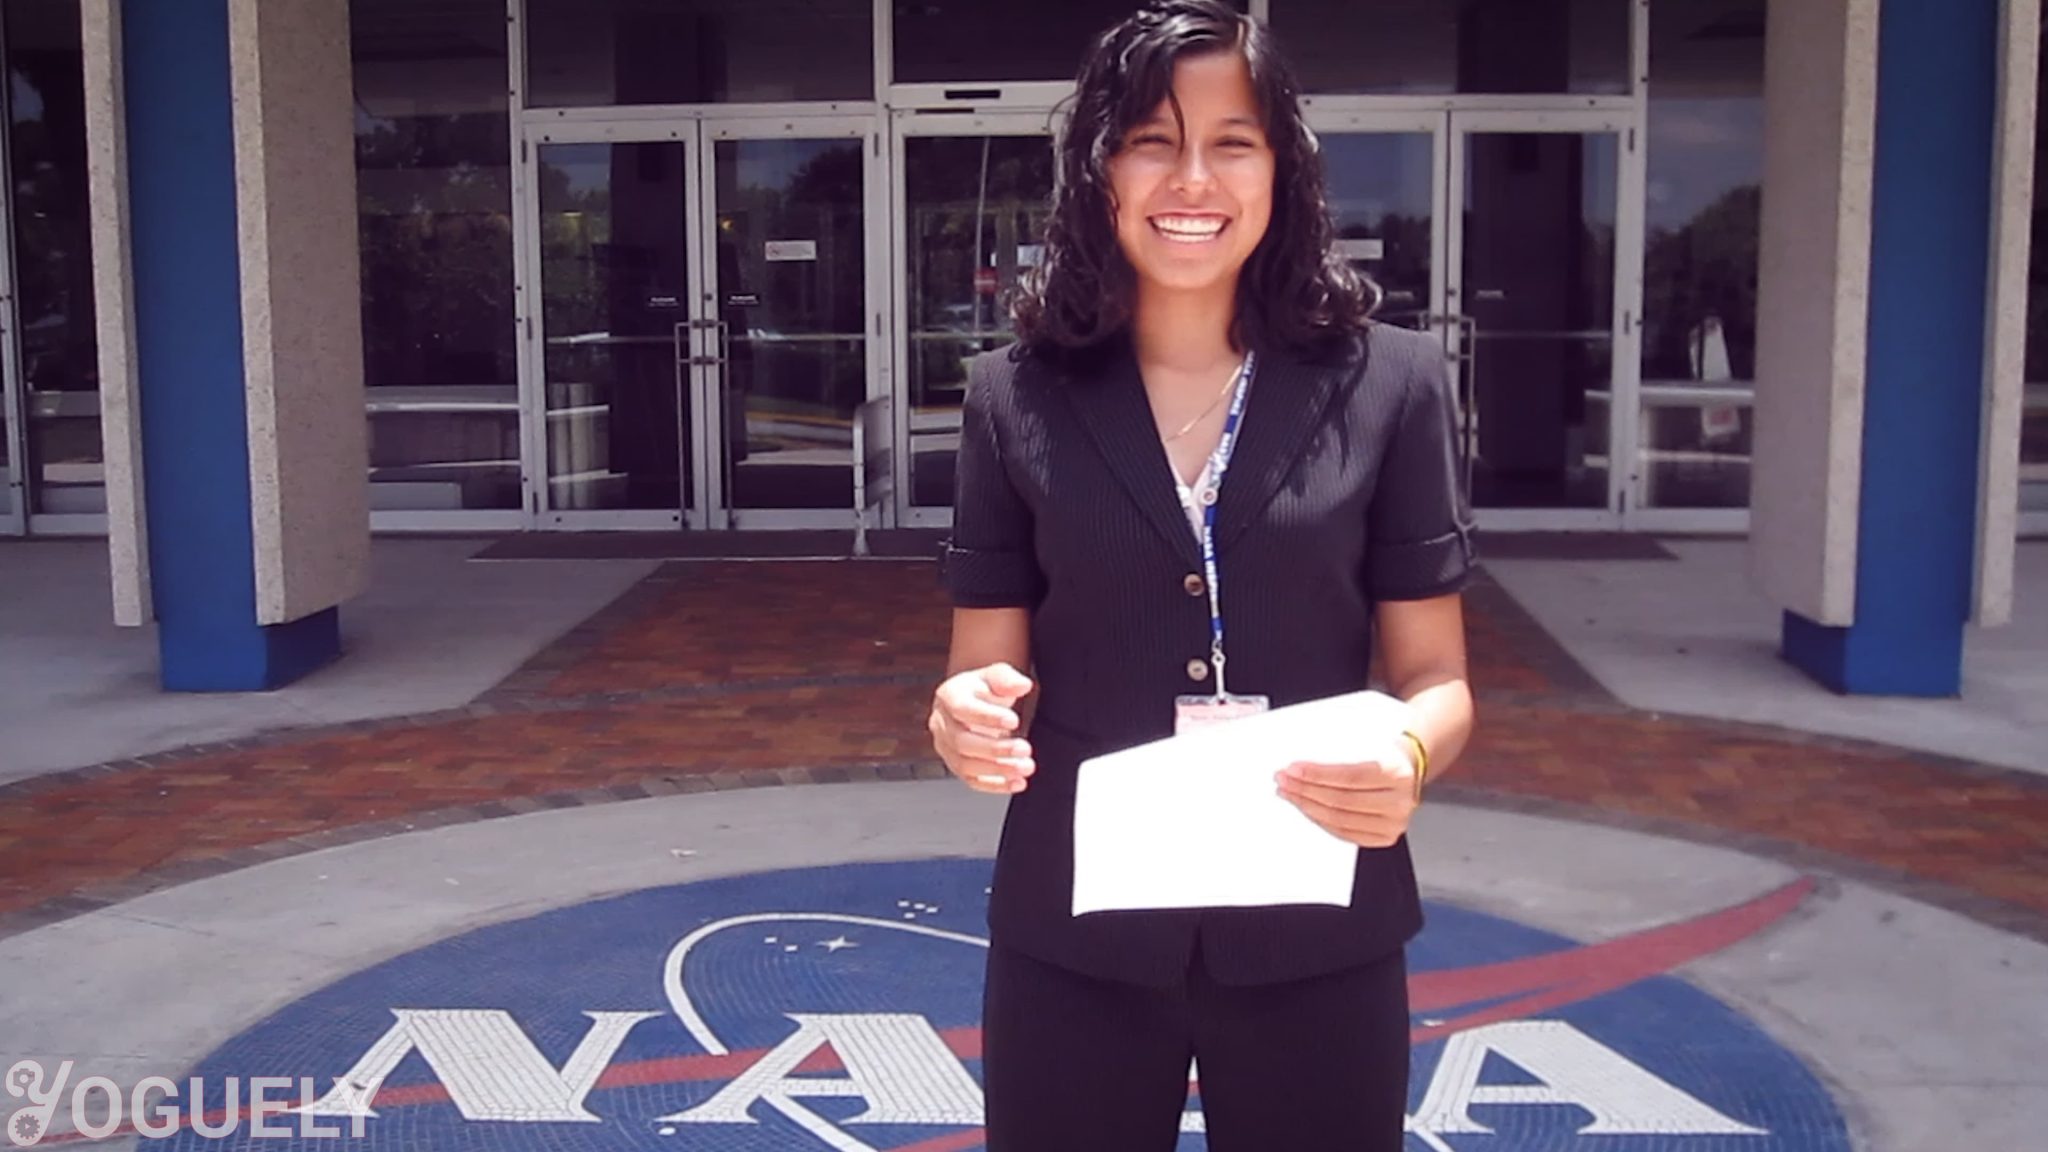 Aida Yoguely's paid high school internship at the NASA Kennedy Space Center in Merritt Island, Florida.